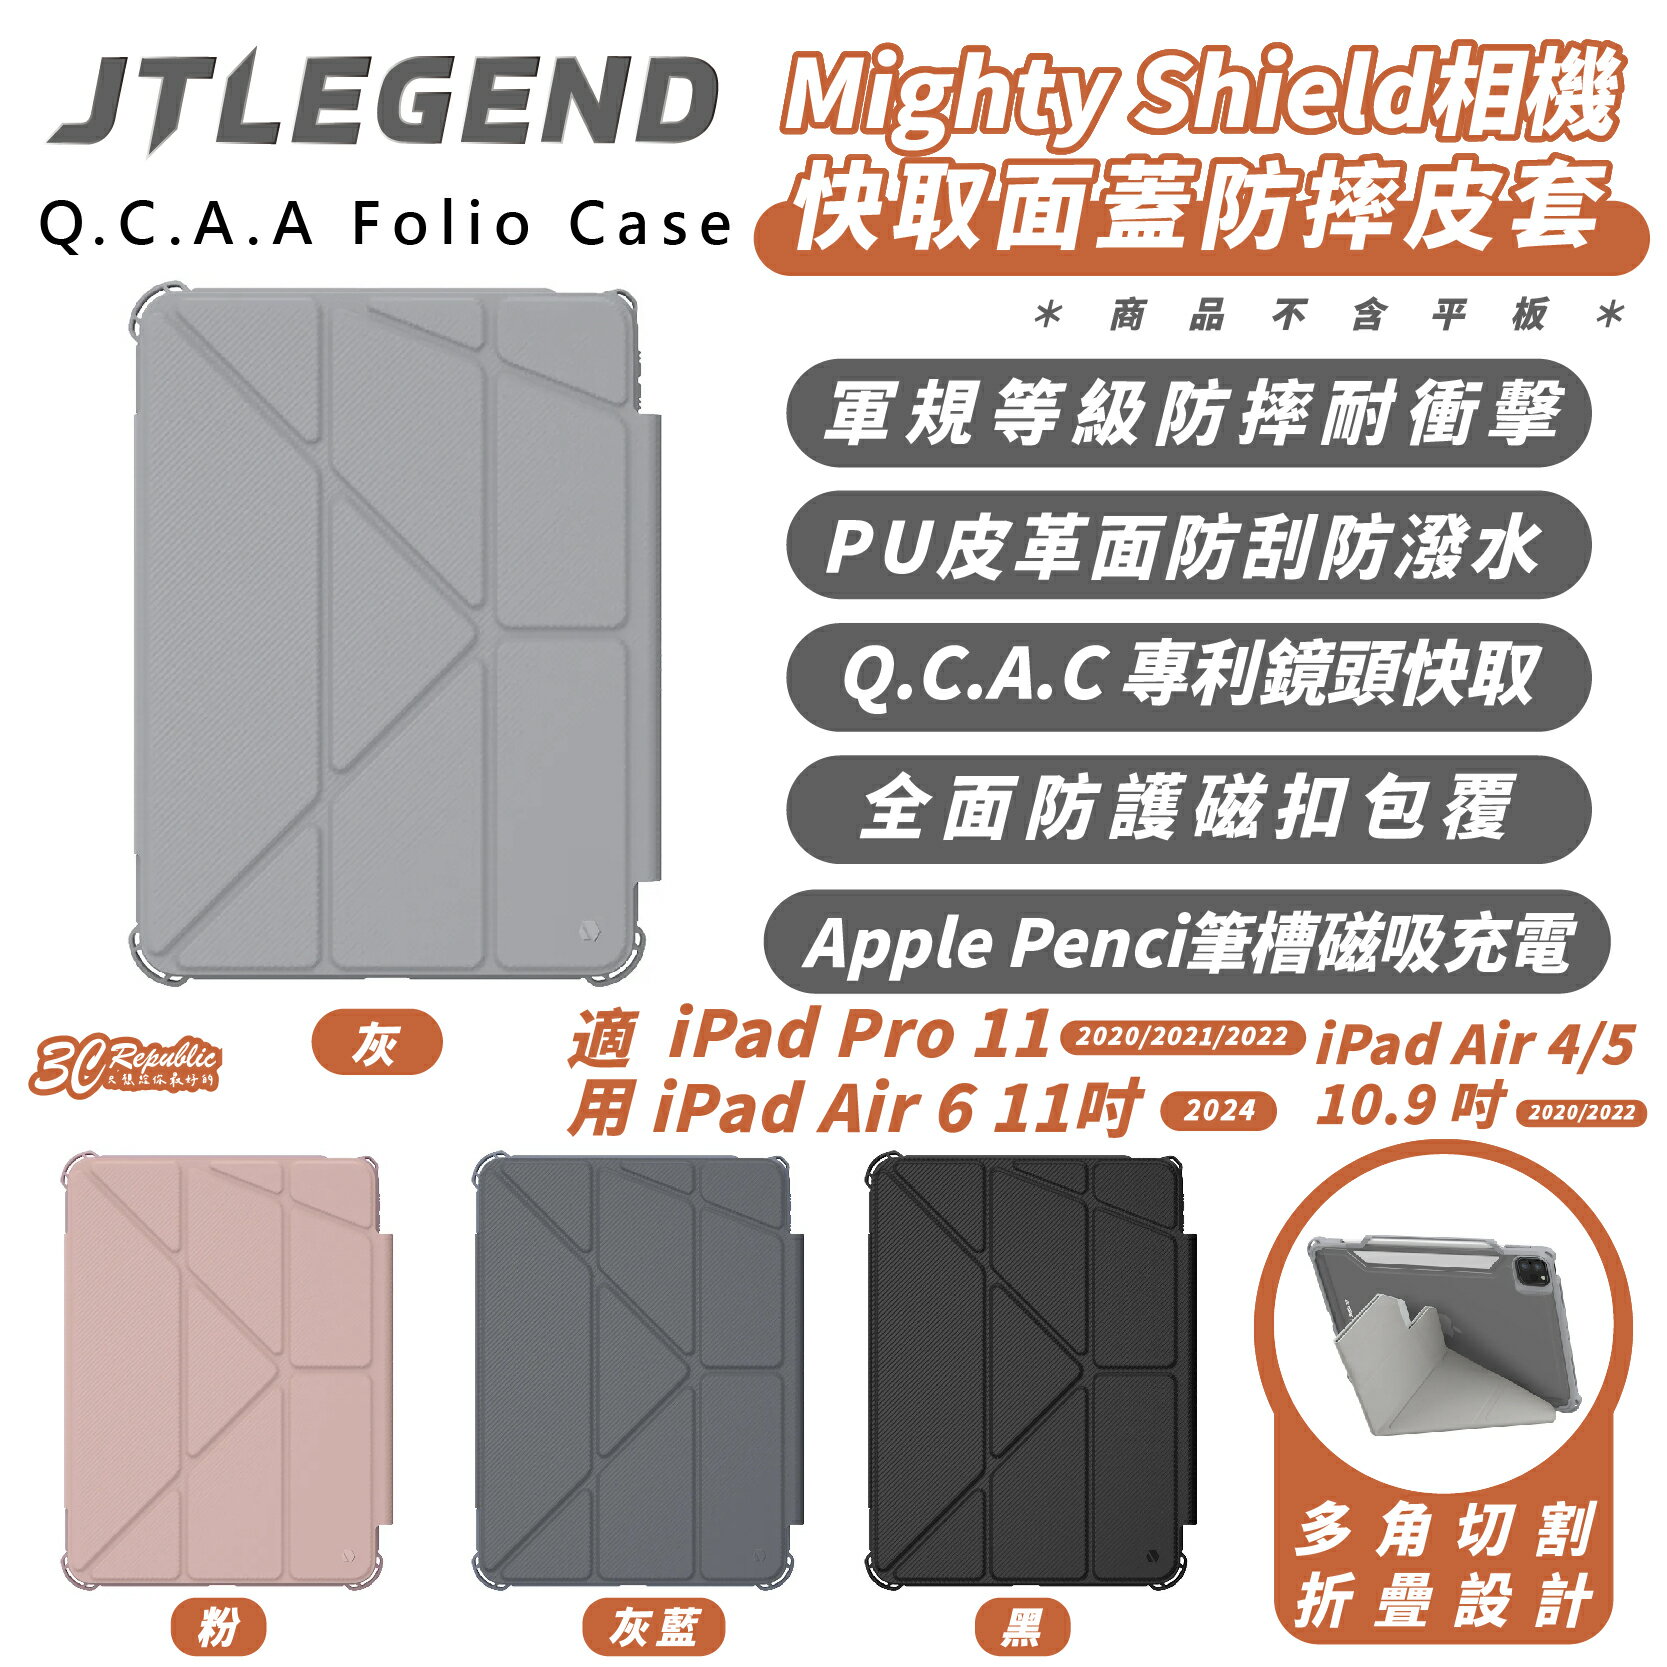 JTLEGEND Mighty Shield 保護殼 平板殼 2024 iPad Air Pro 10.9 11 吋【APP下單8%點數回饋】